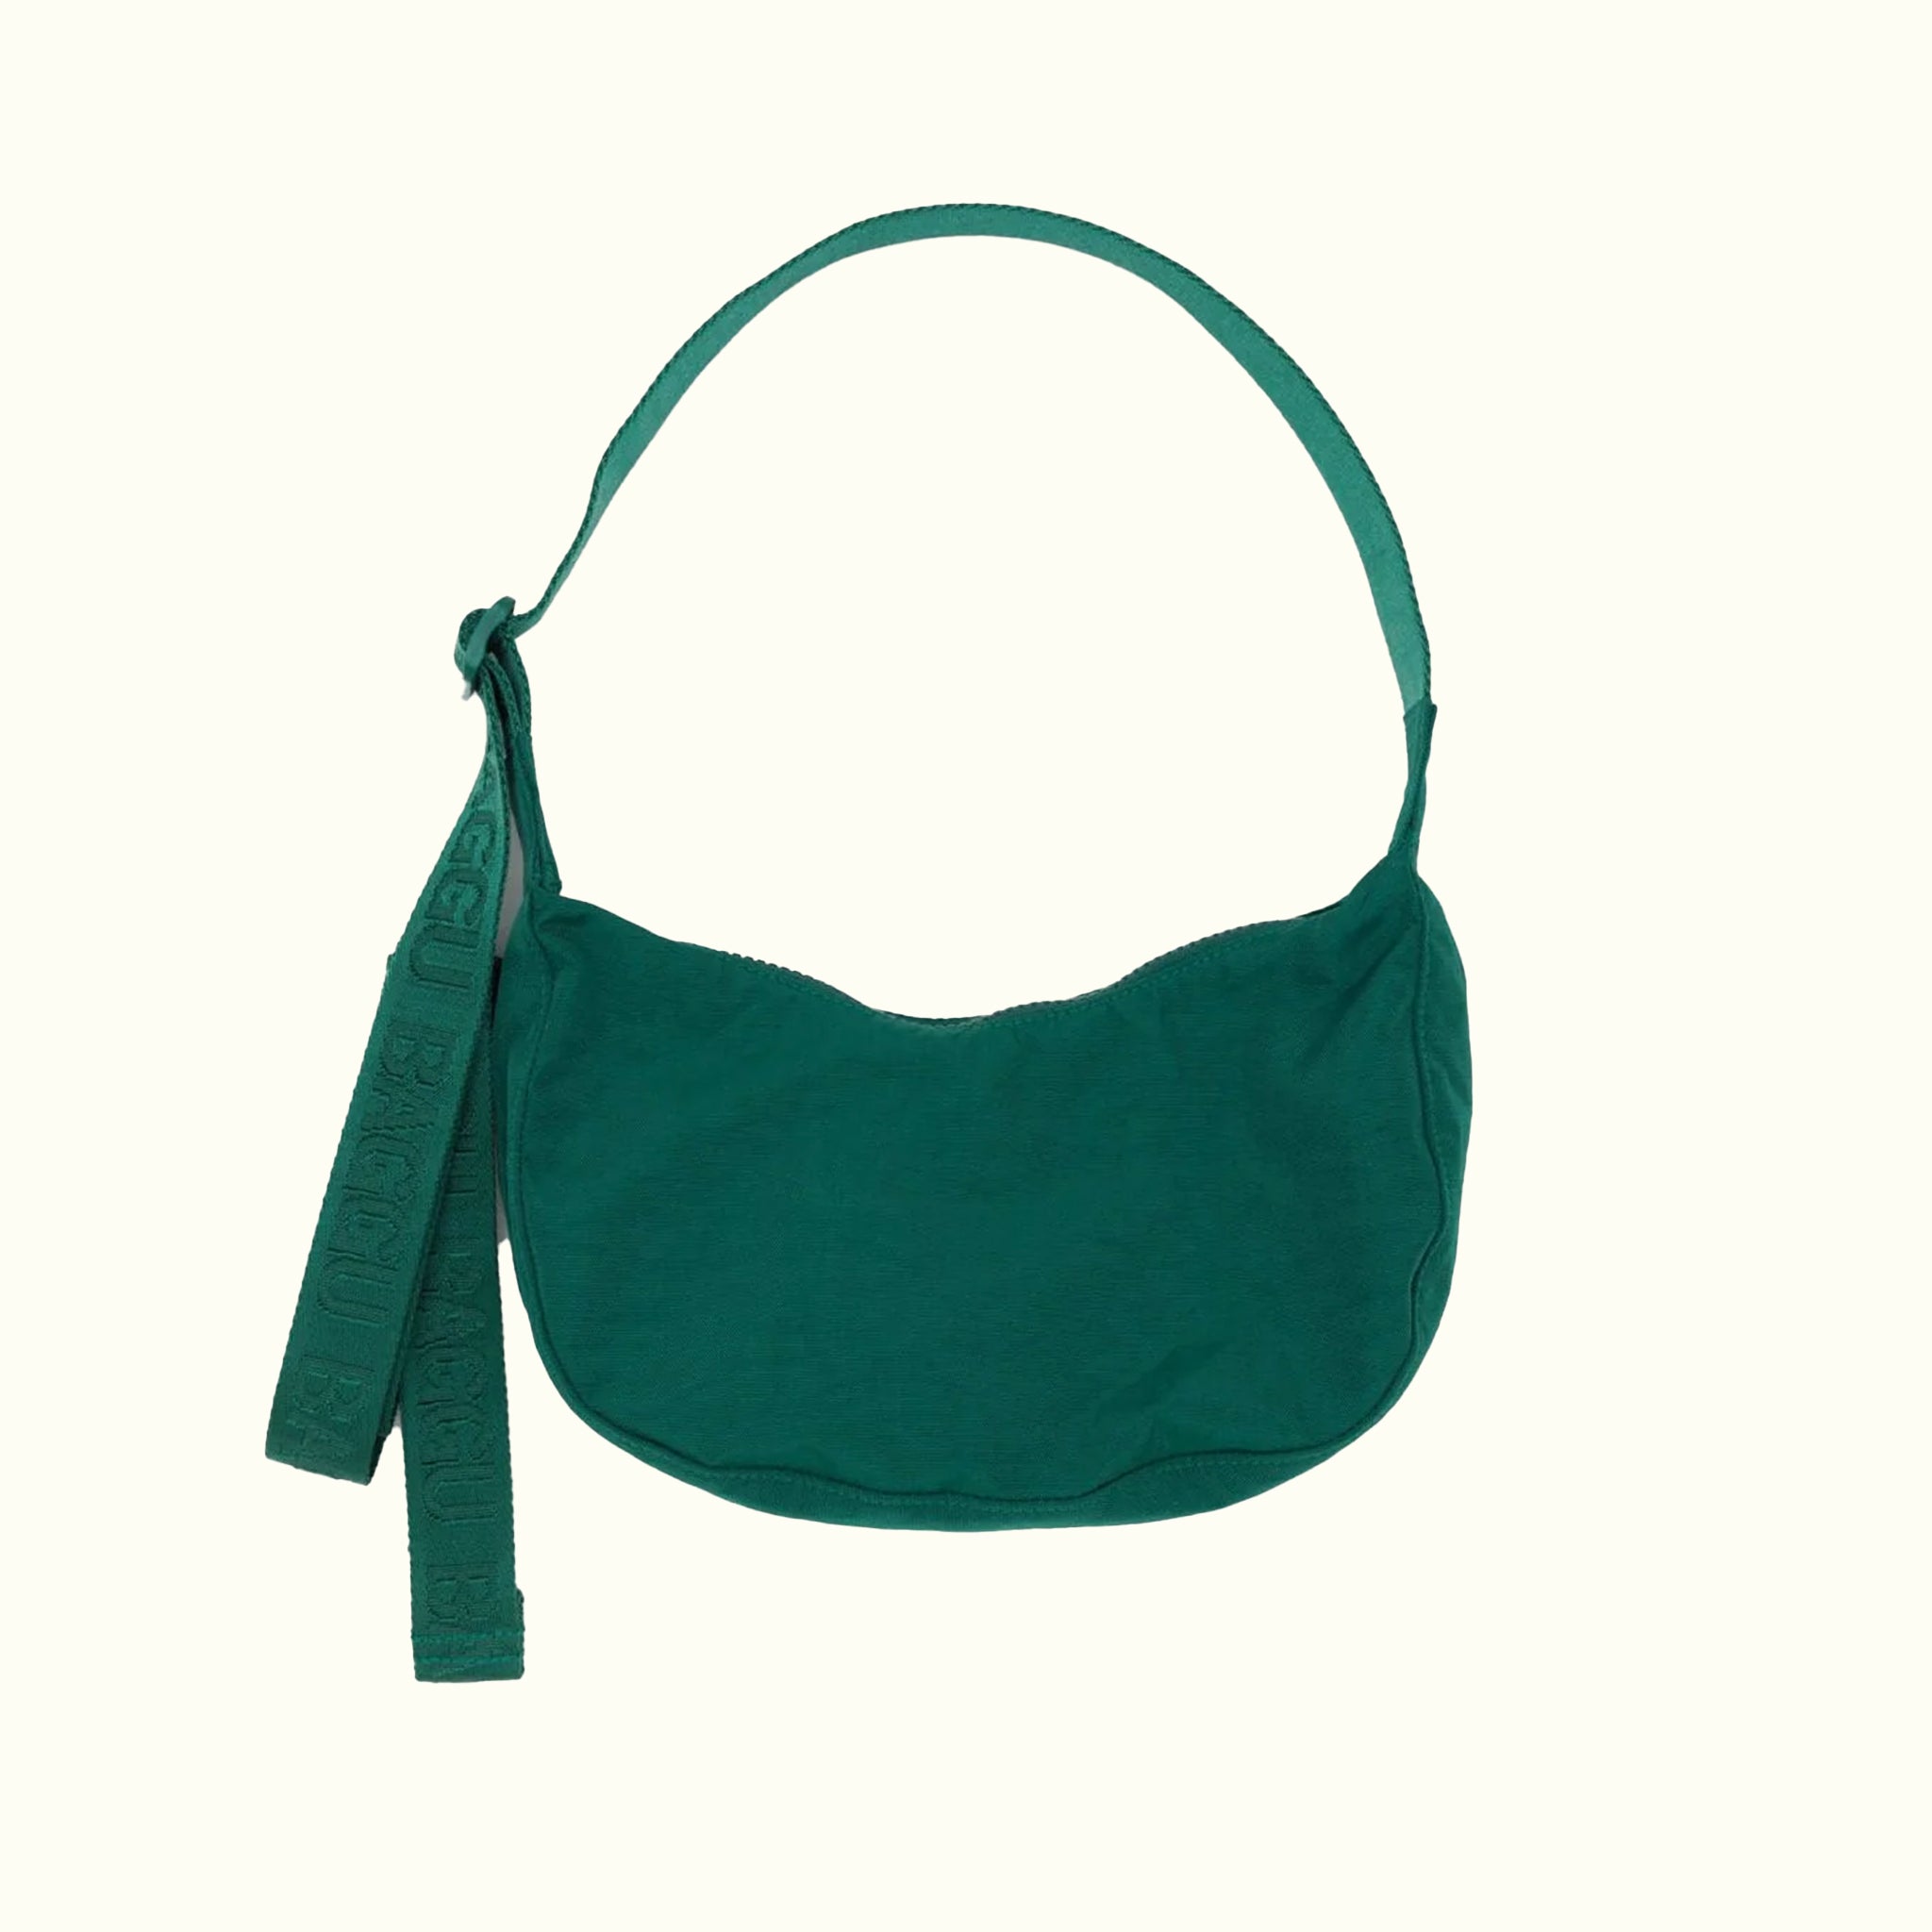 A green nylon shoulder / crossbody handbag with an adjustable strap. 